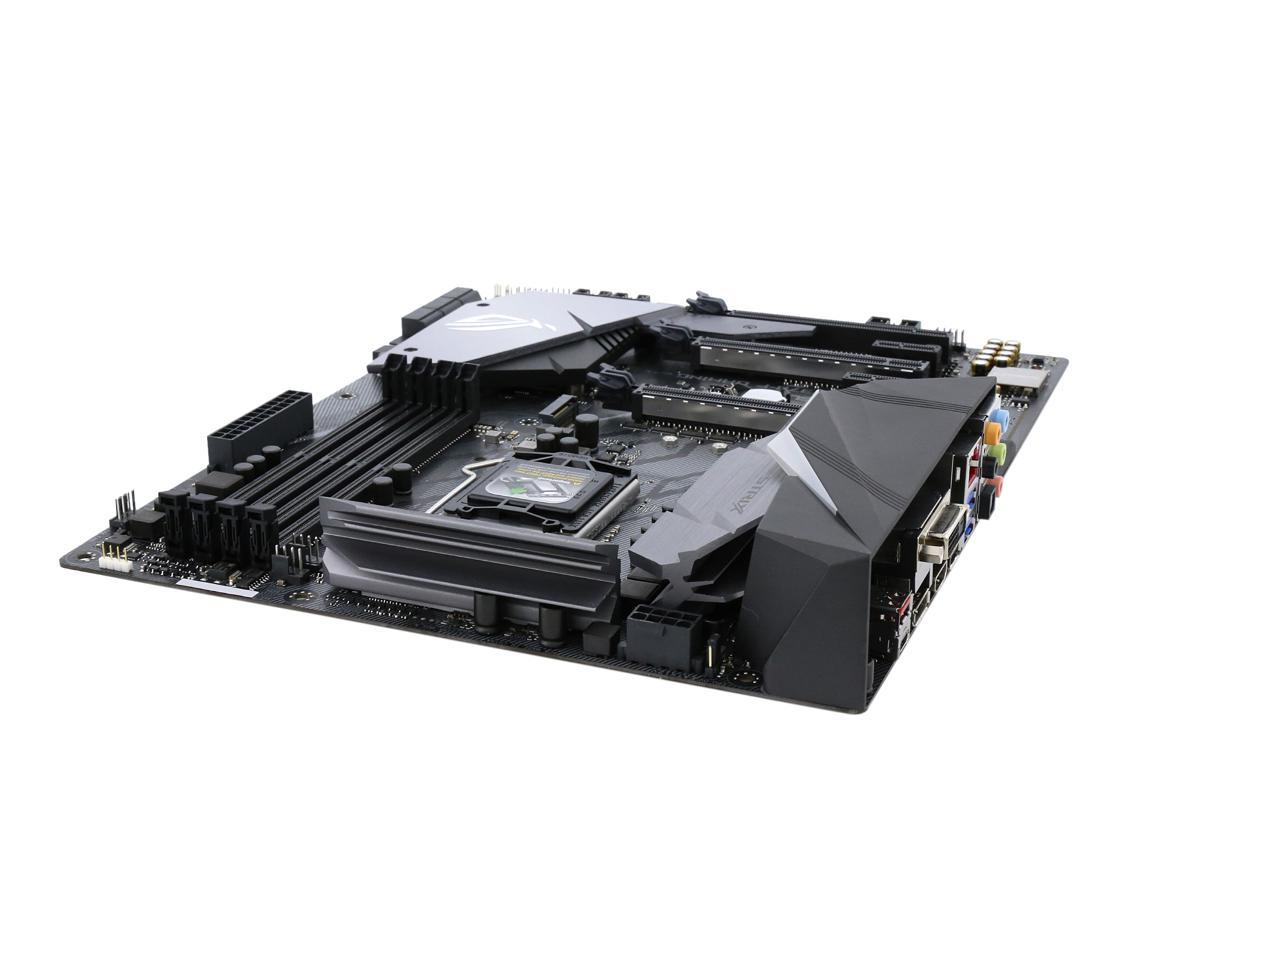 ASUS ROG Strix Z370-F Gaming LGA 1151 (300 Series) ATX Intel